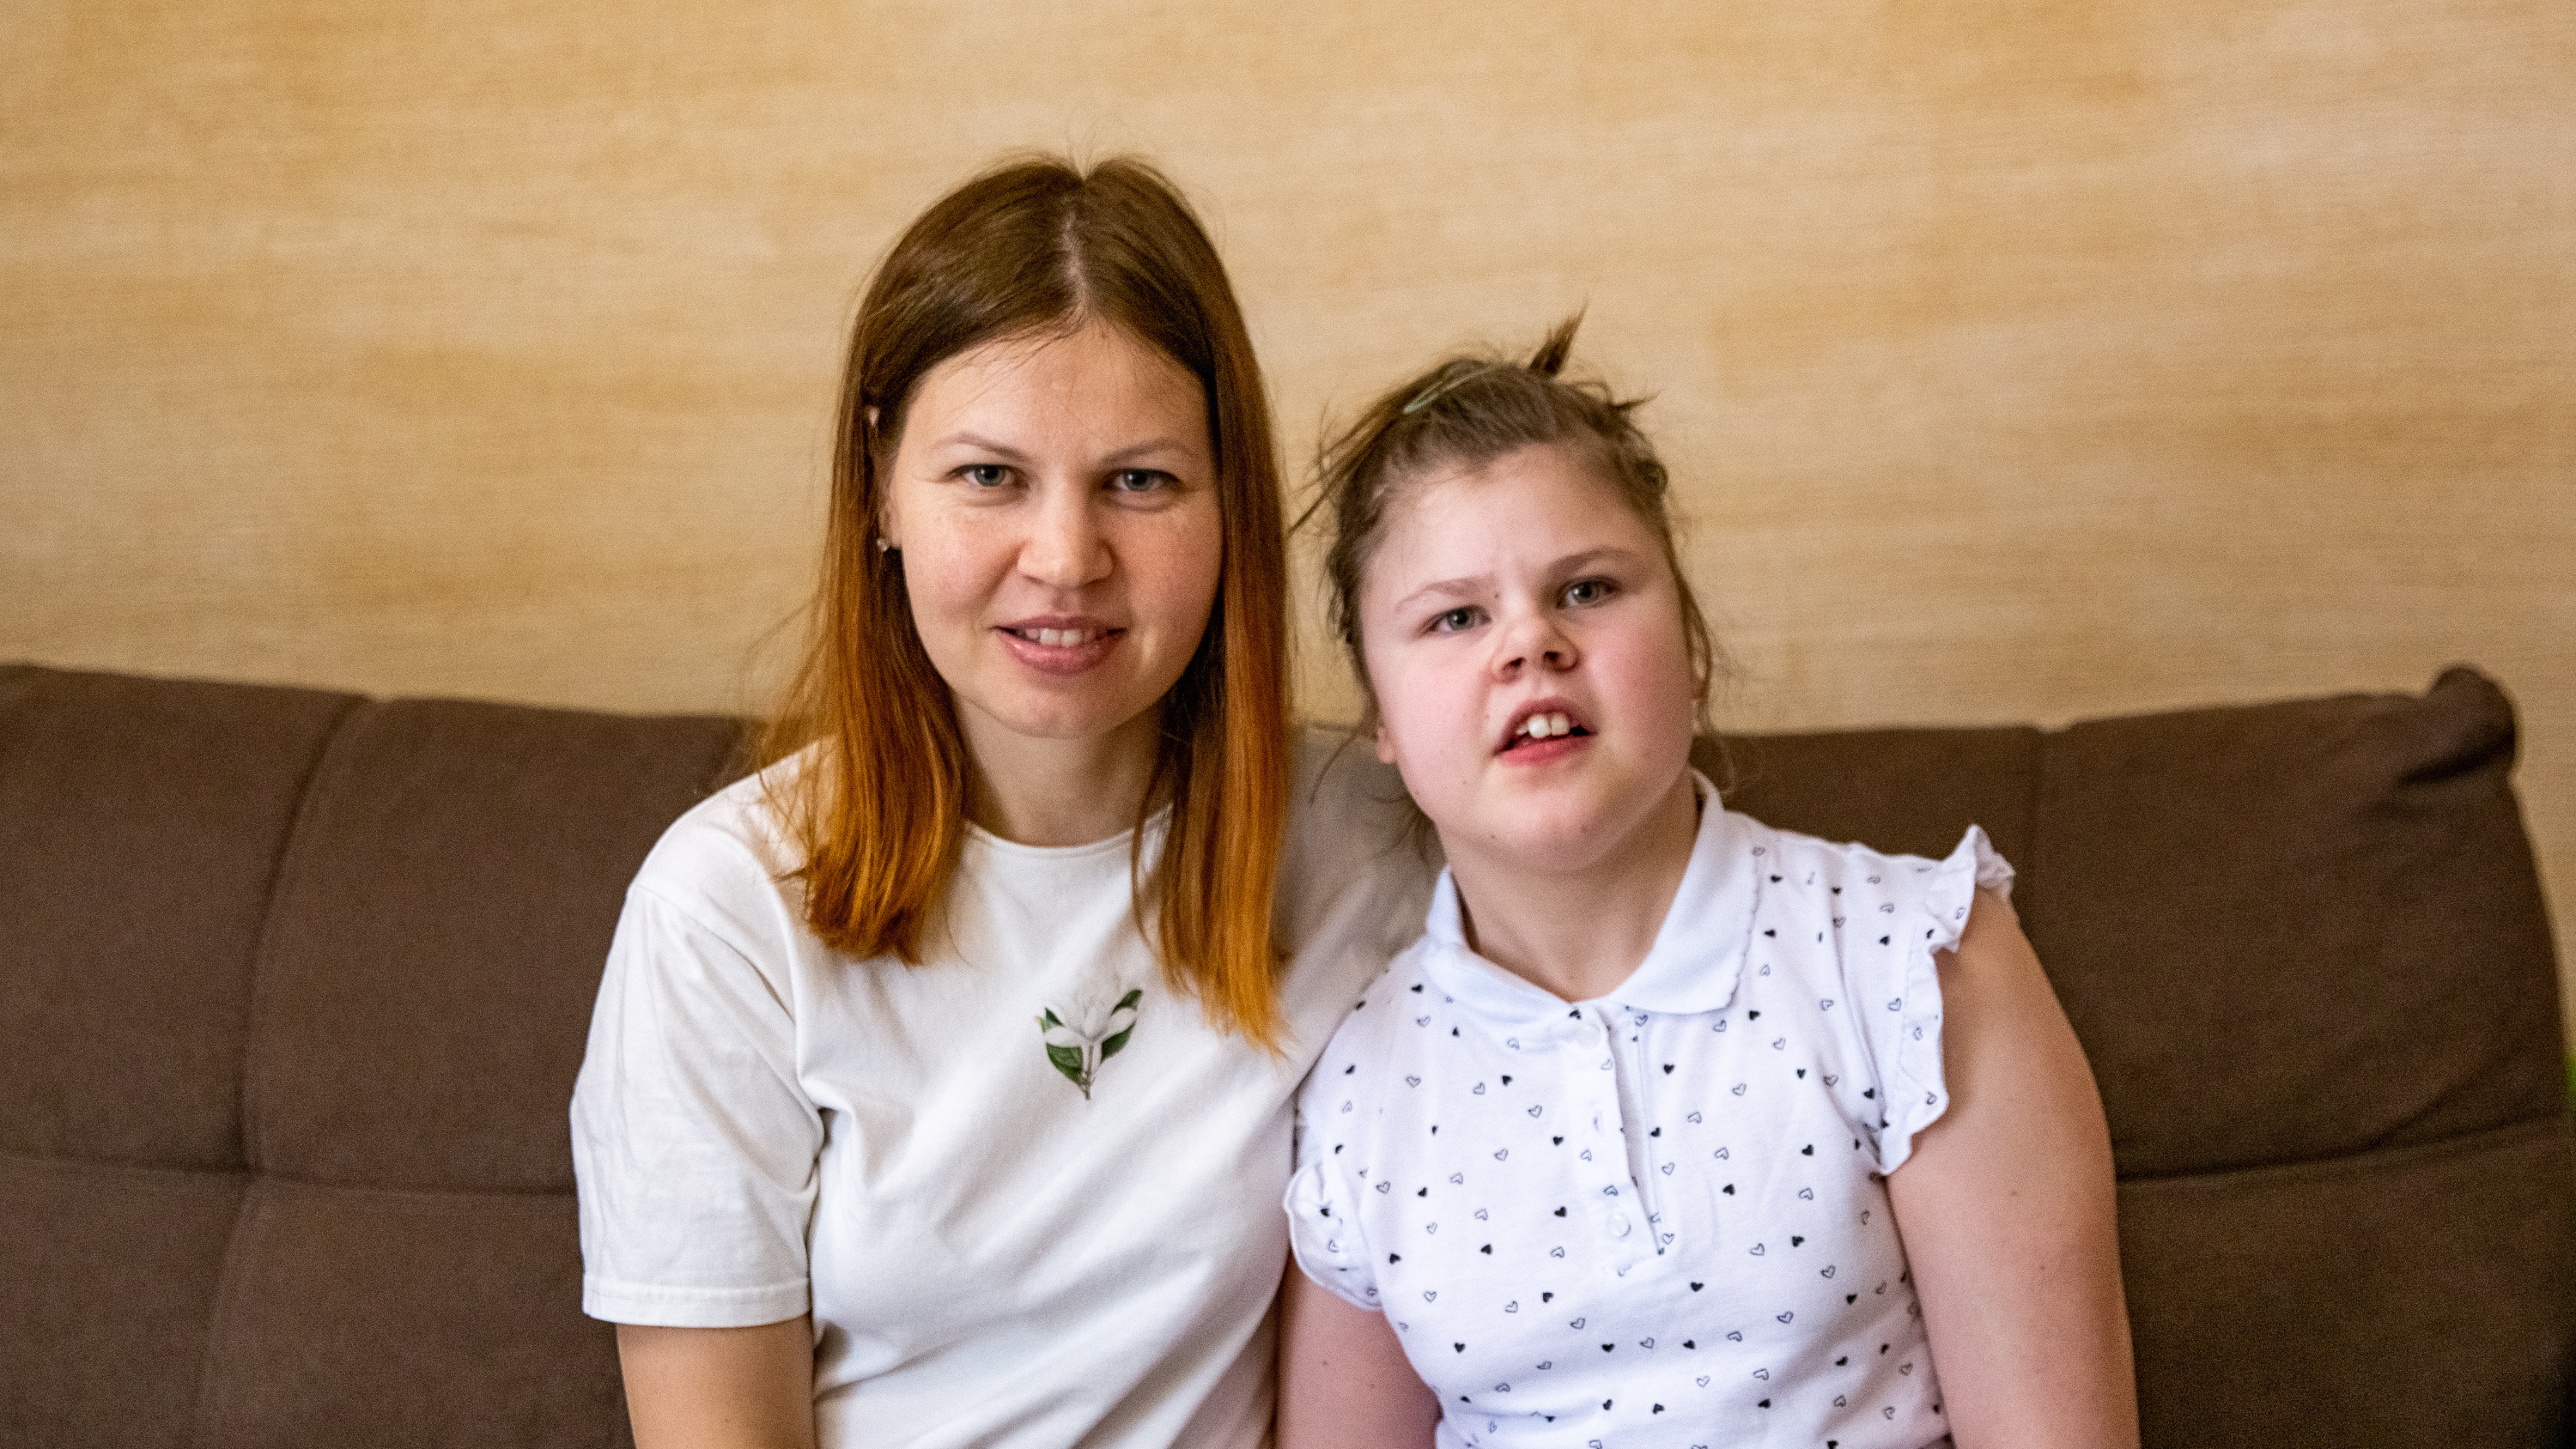 Ярославна — о лечении пациентов с ДЦП в Европе: «Врачи забирали детей с улыбкой»